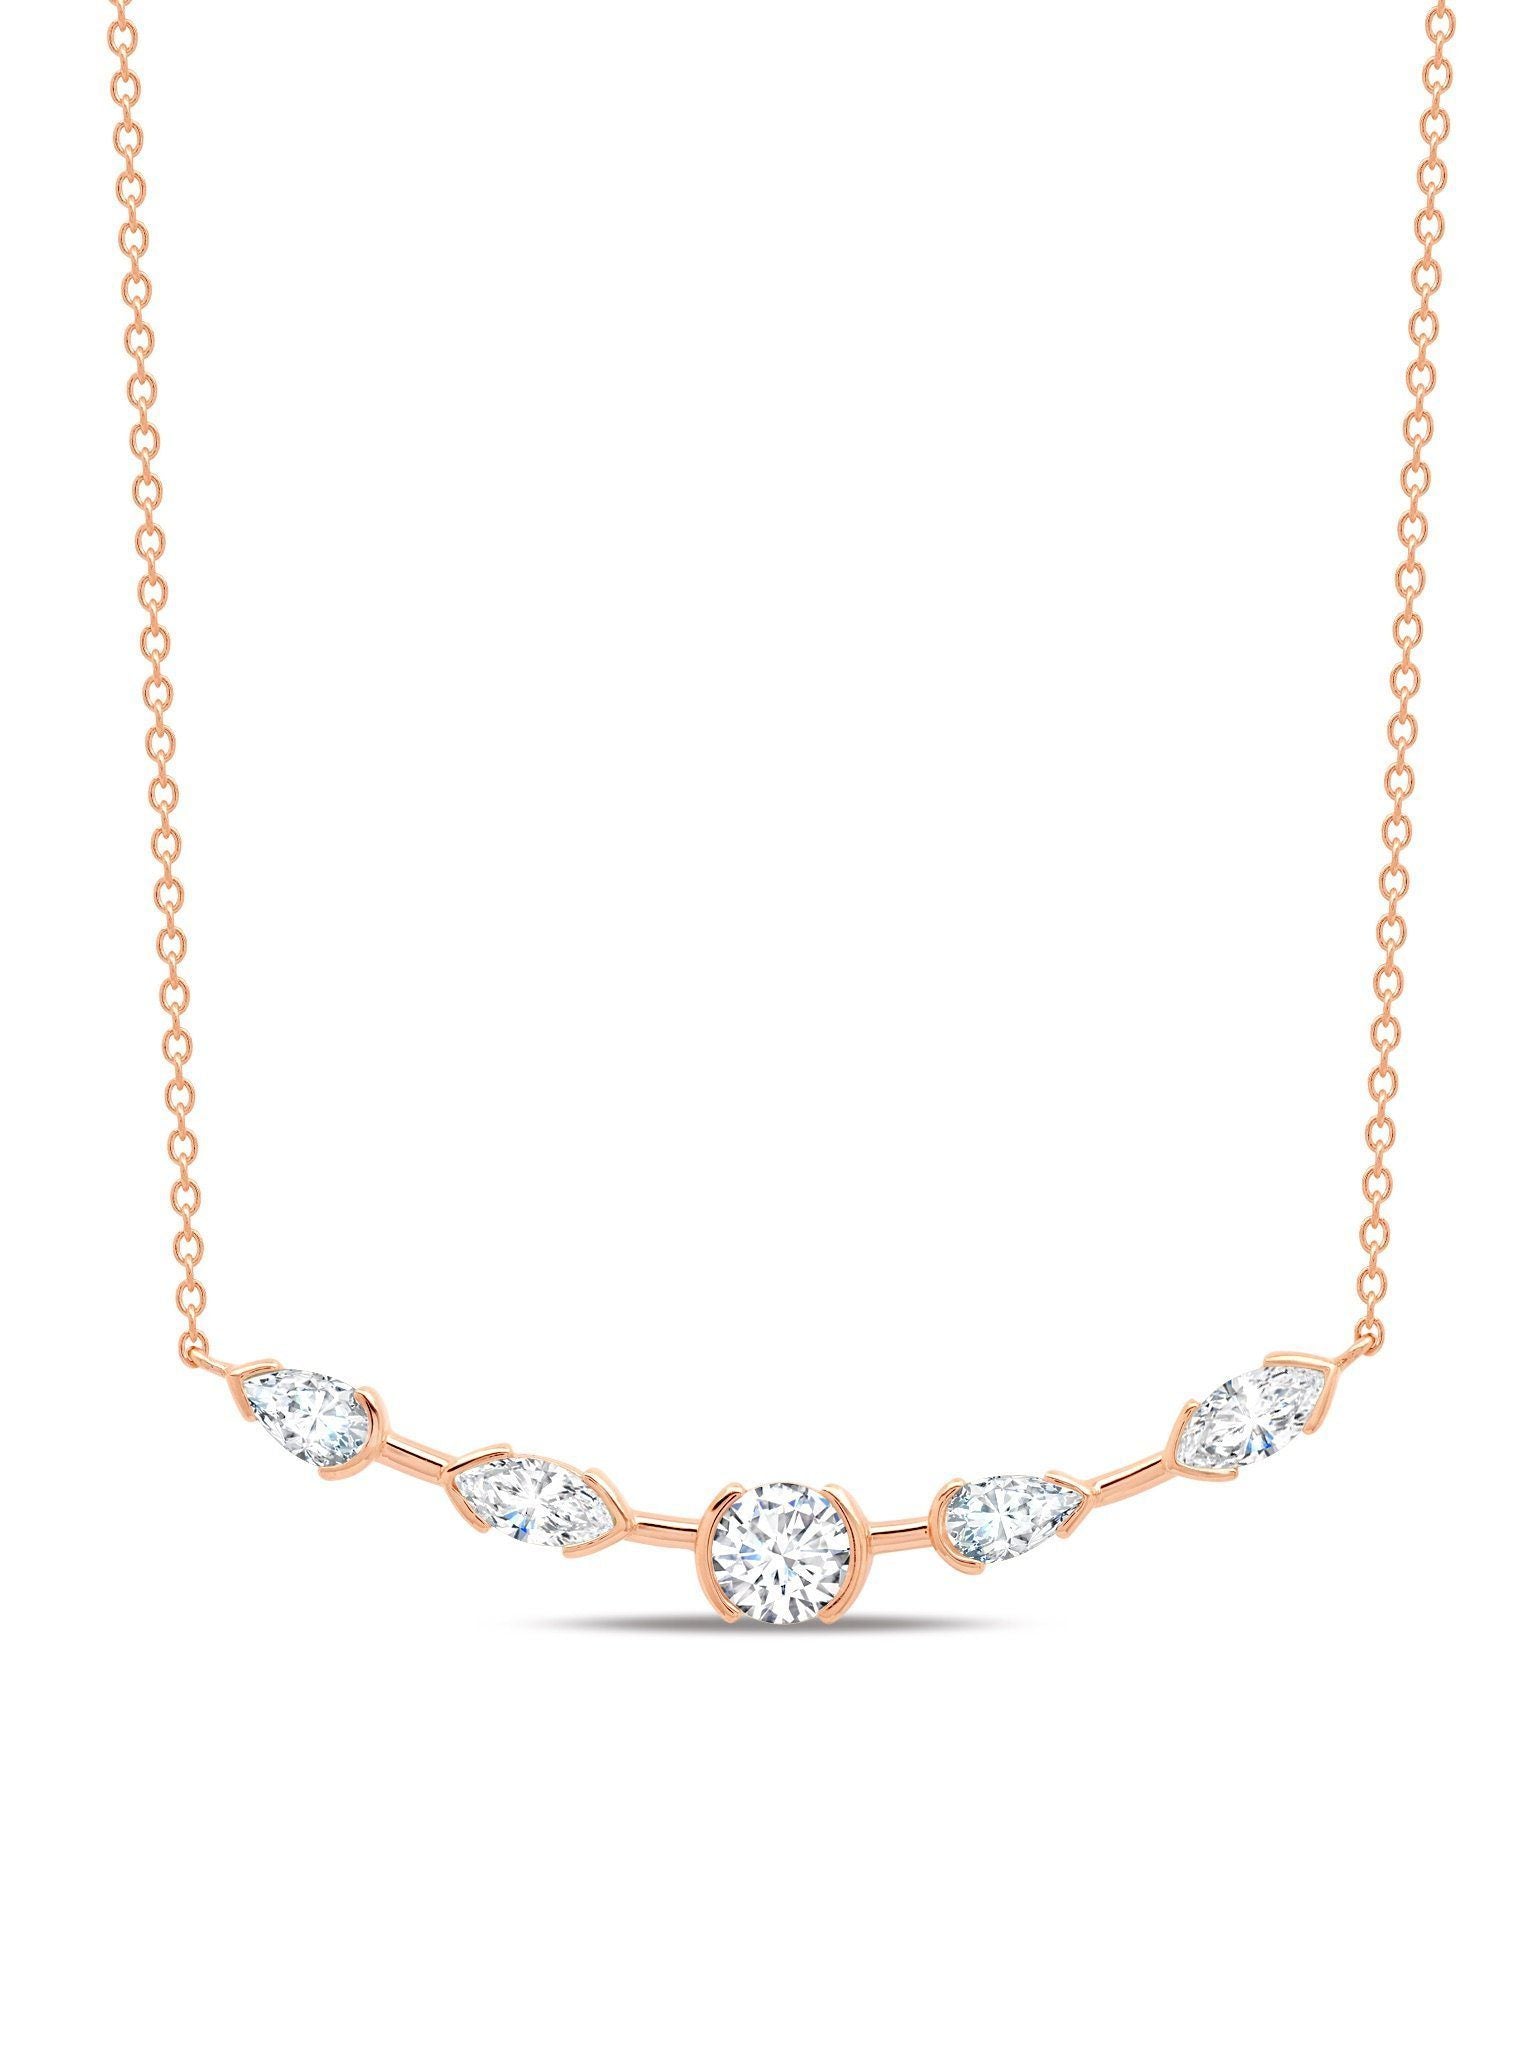 Crislu Jewelry Crislu Lavish Split Bezel CZ Necklace Finished in 18kt Rose Gold